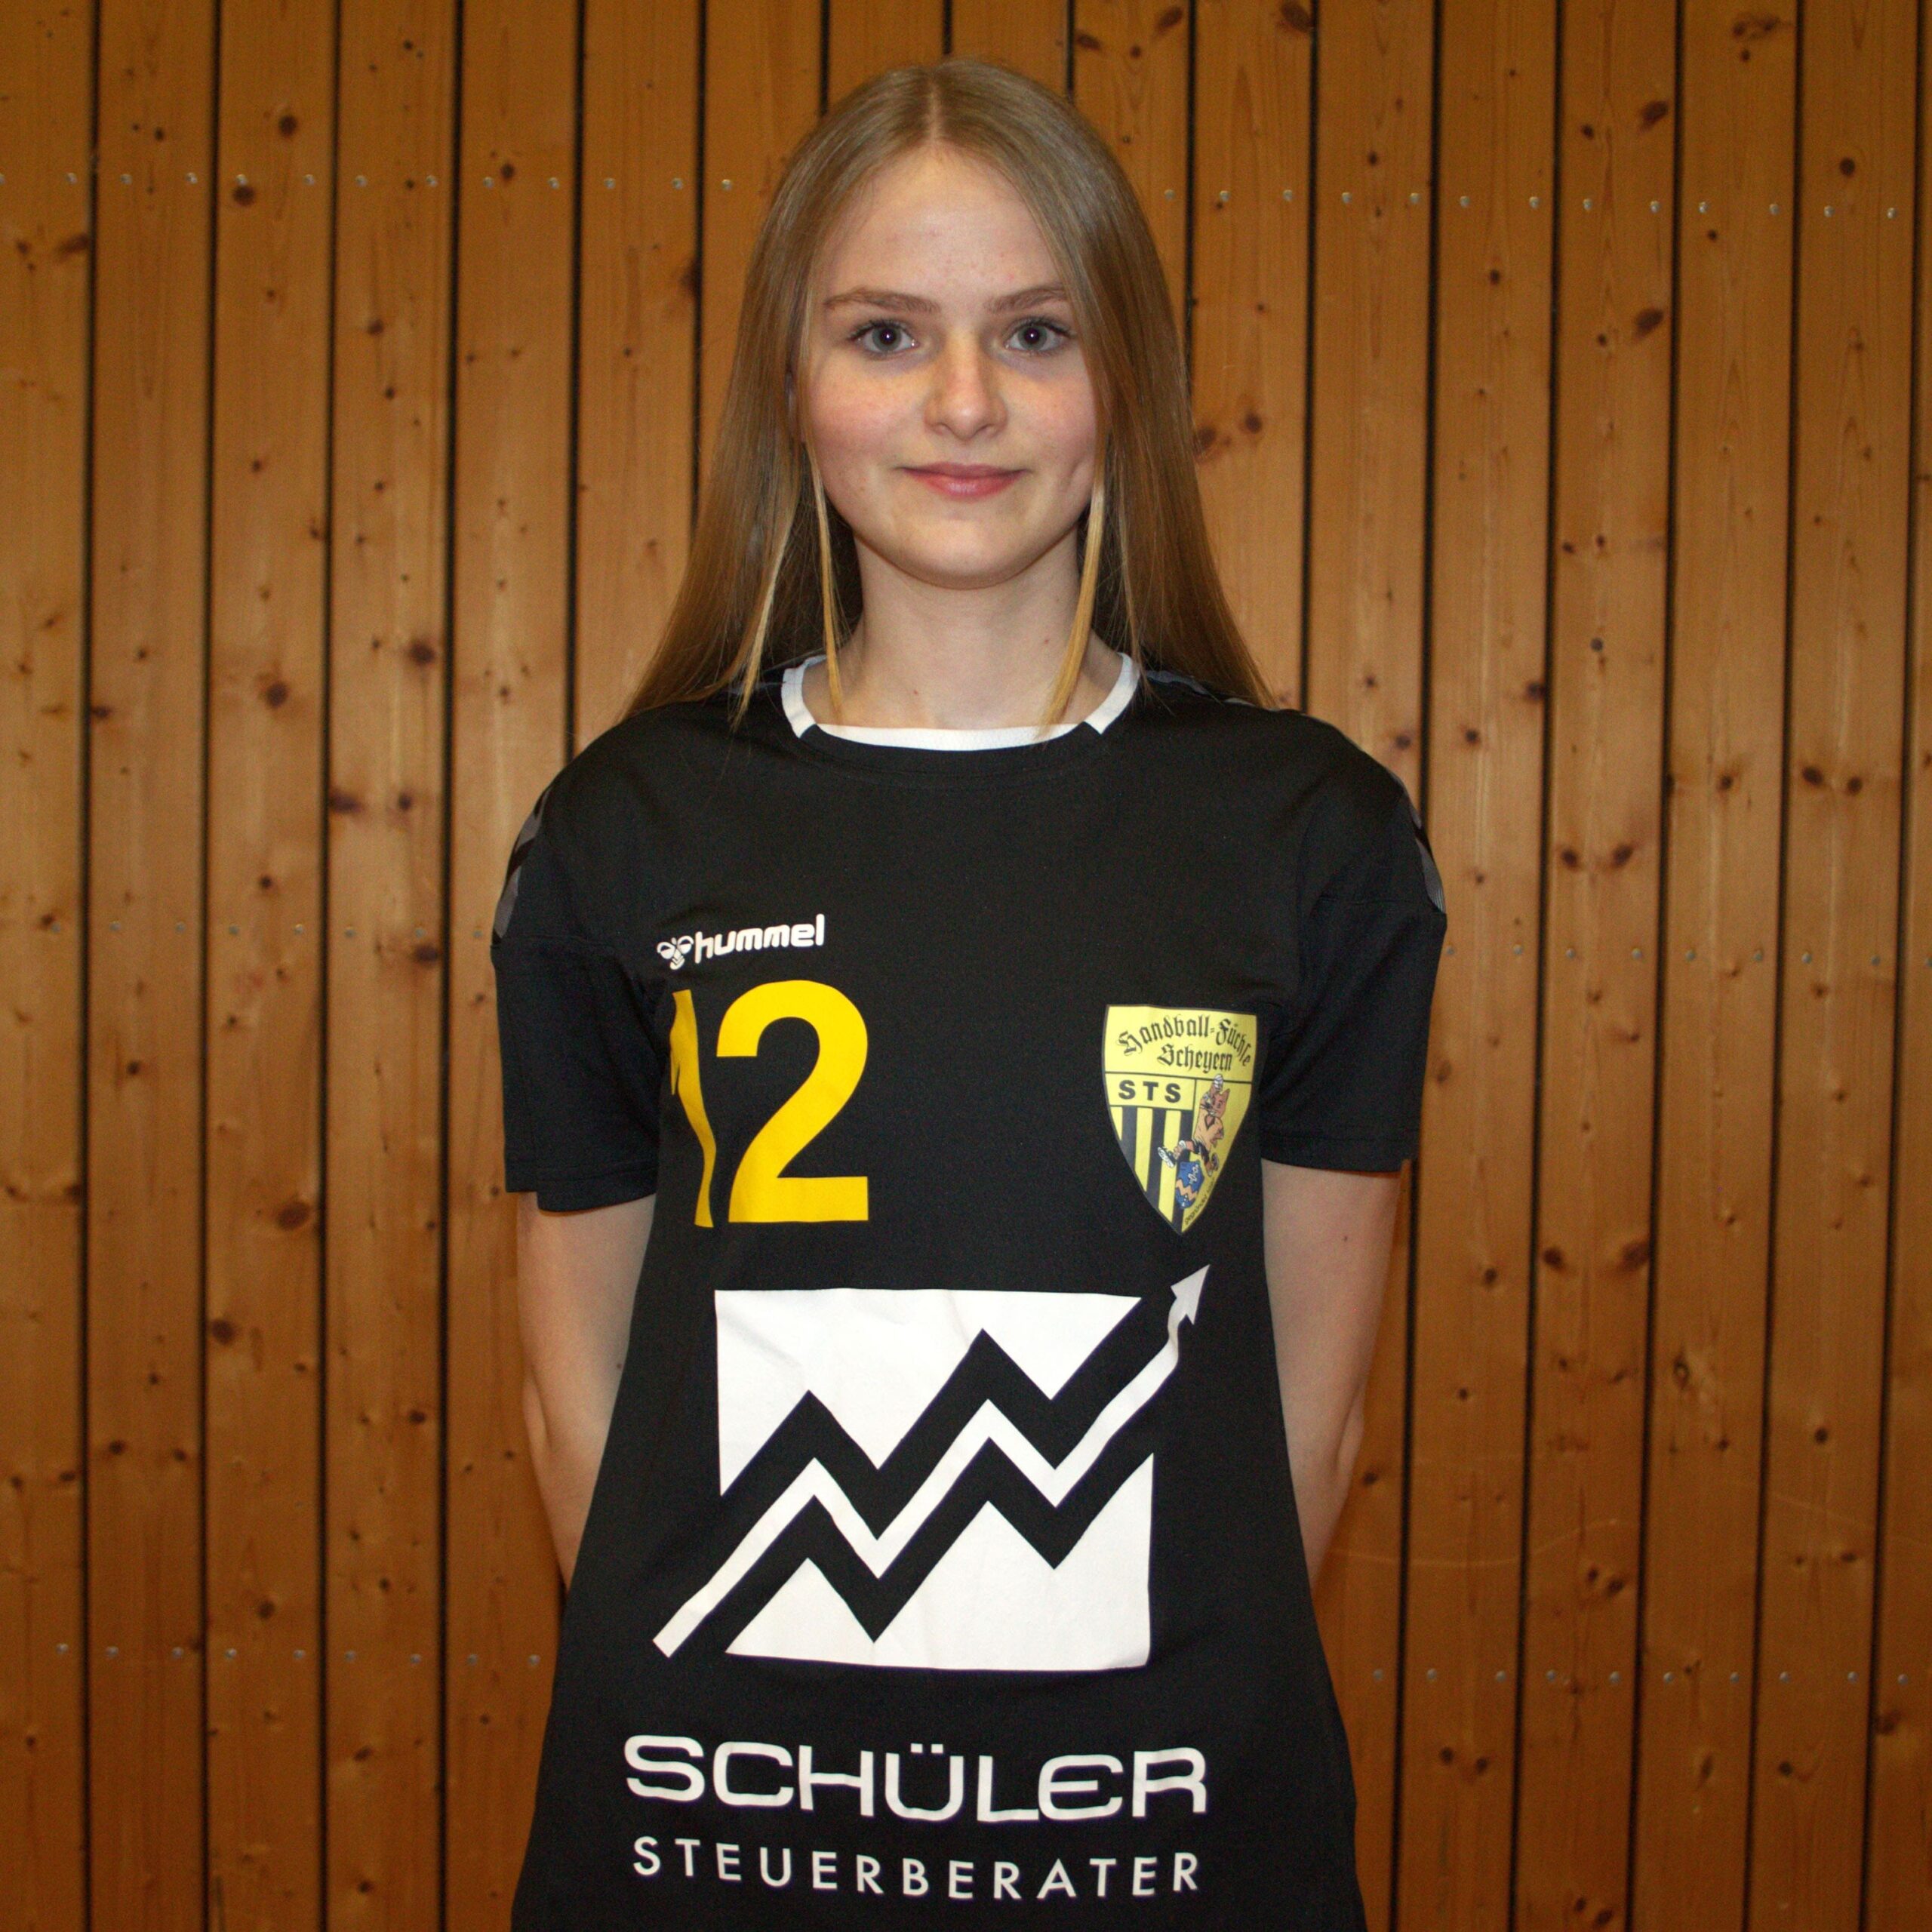 Sarah Thurner weibliche A Saison 2022/23